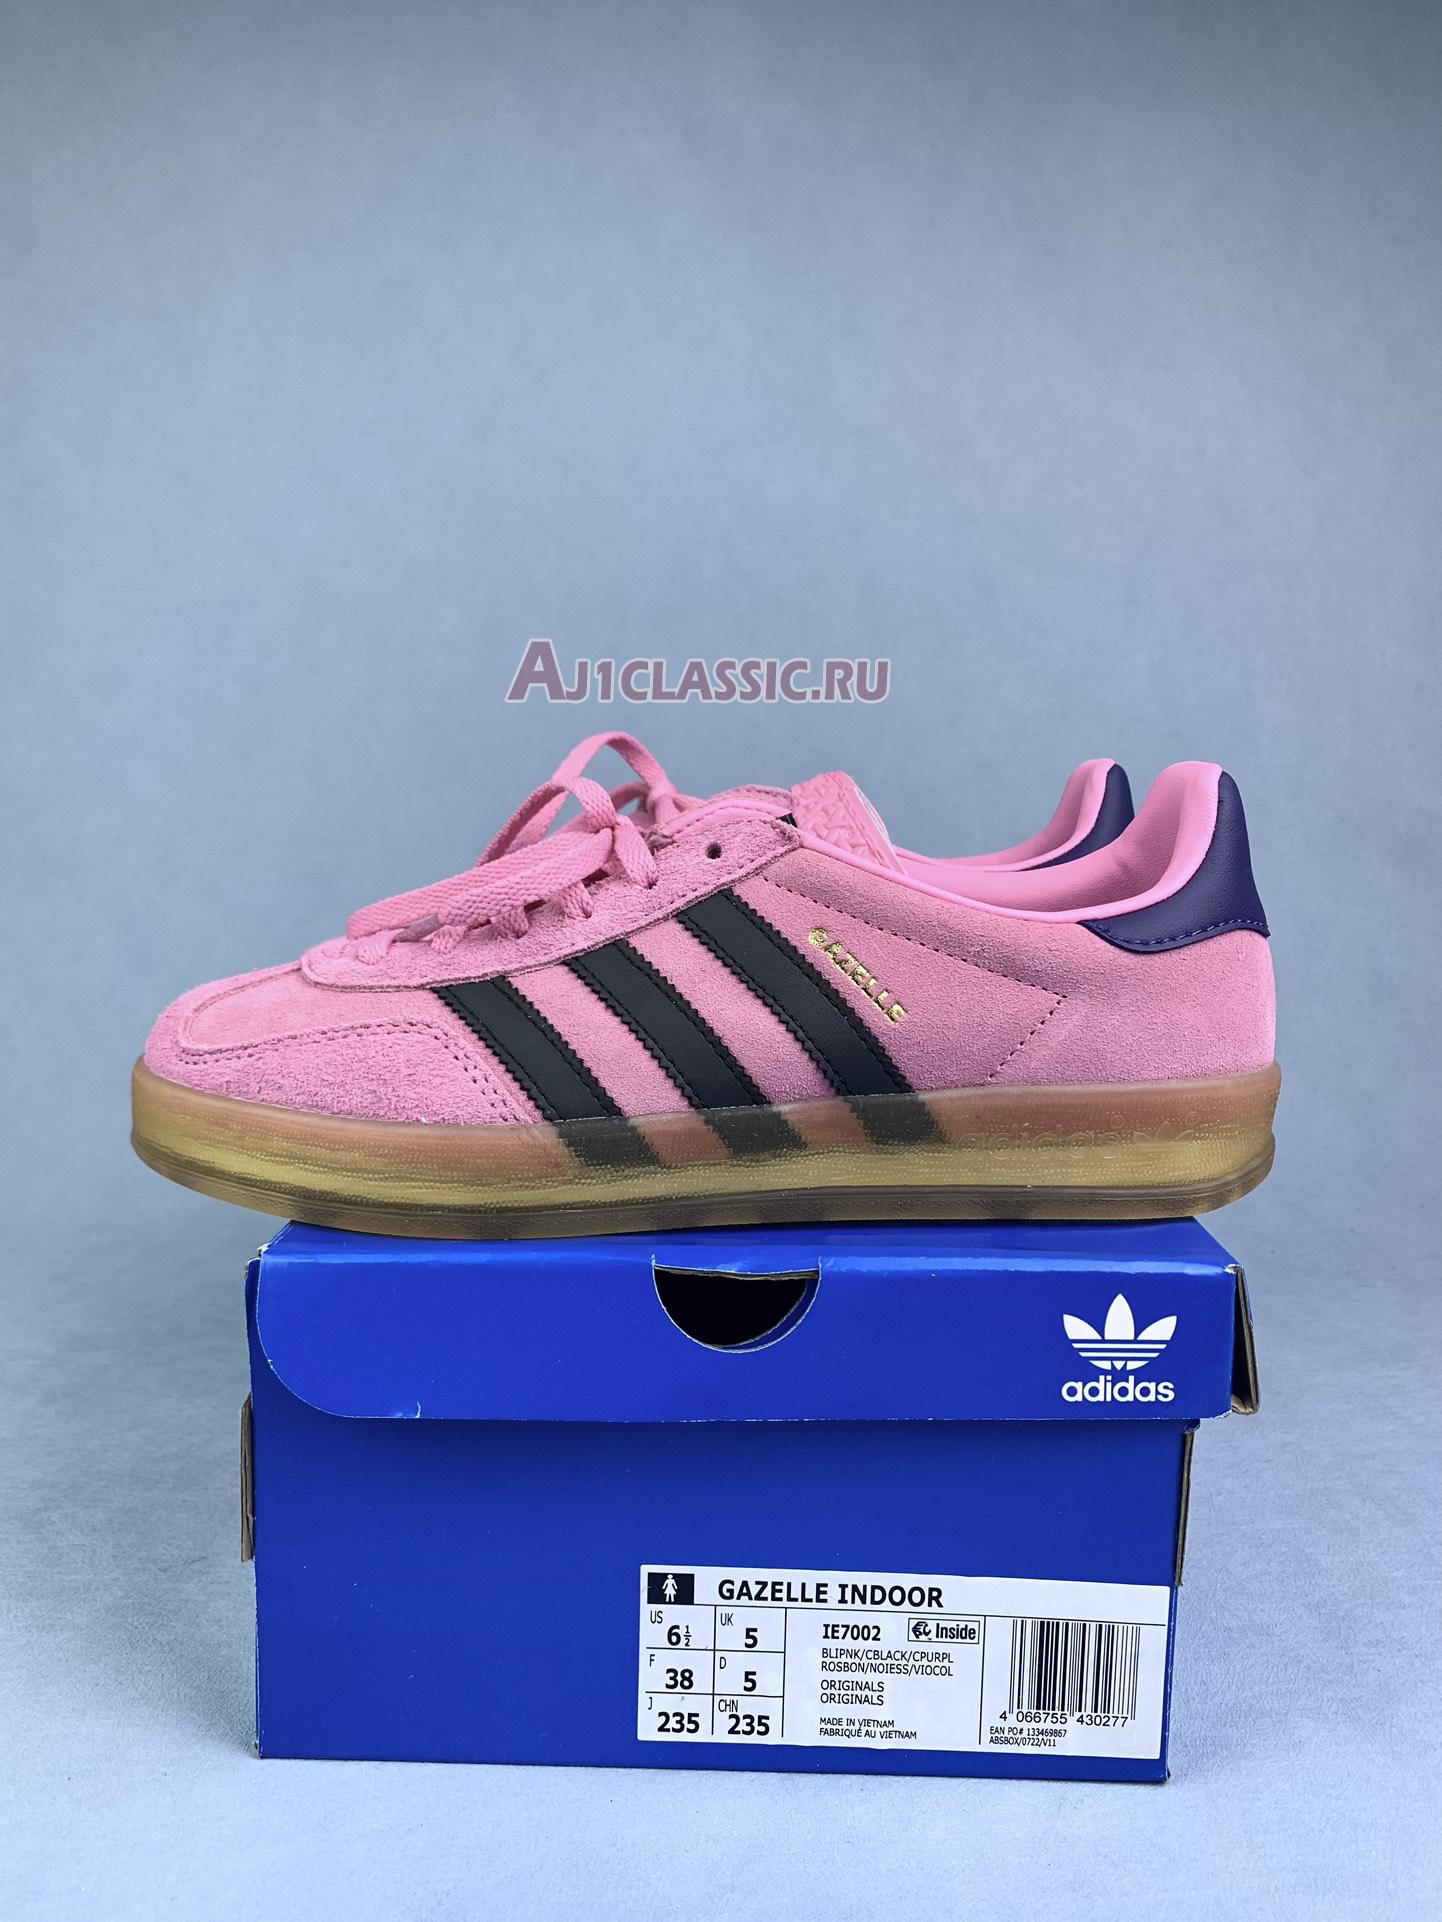 Adidas Gazelle Indoor "Bliss Pink Purple" IE7002